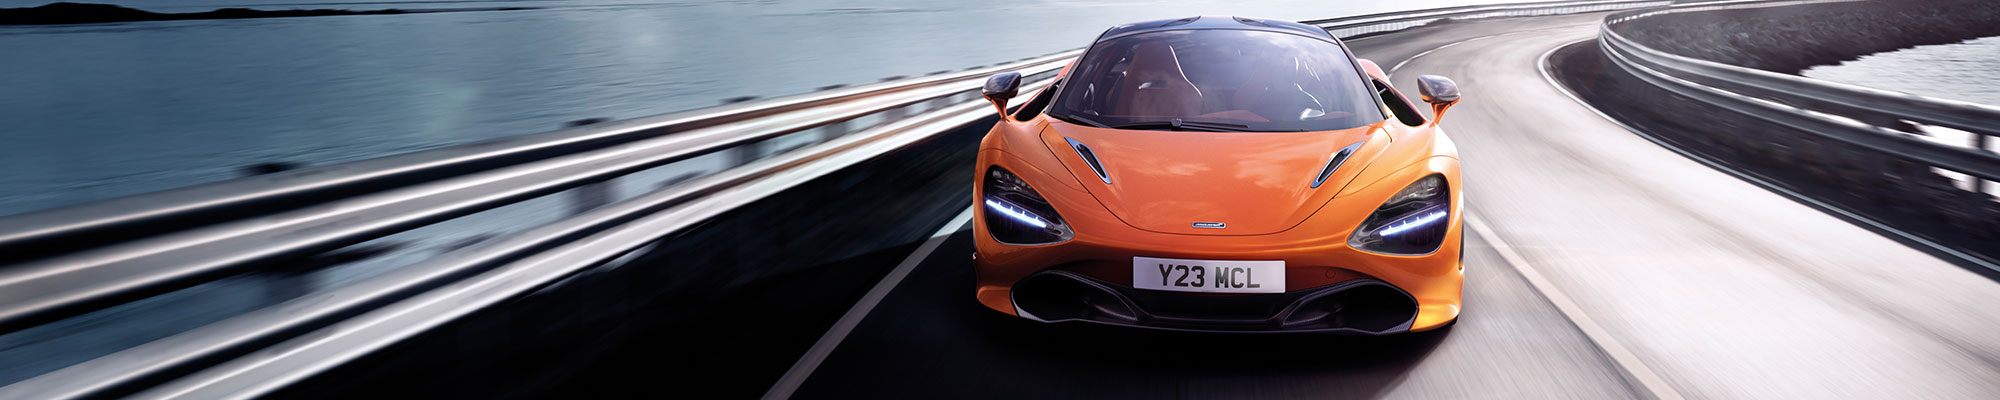 Dimmitt-Automotive-Group-McLaren-720S-Featured-Image